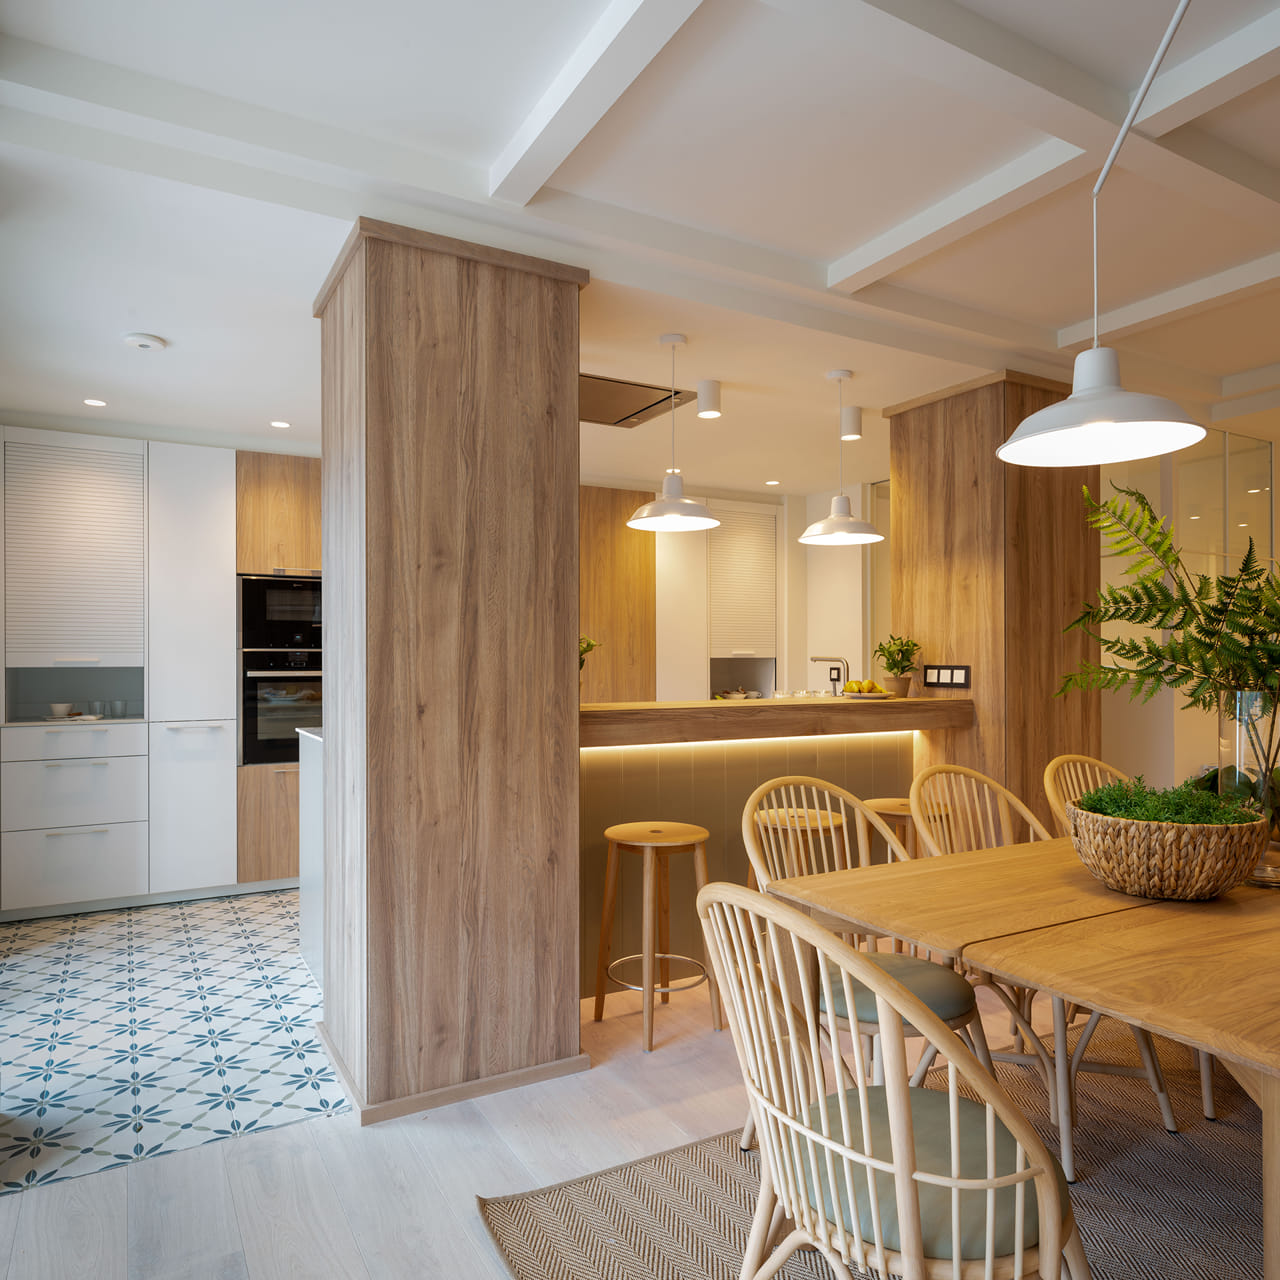 Santos open-plan kitchen in white and wood